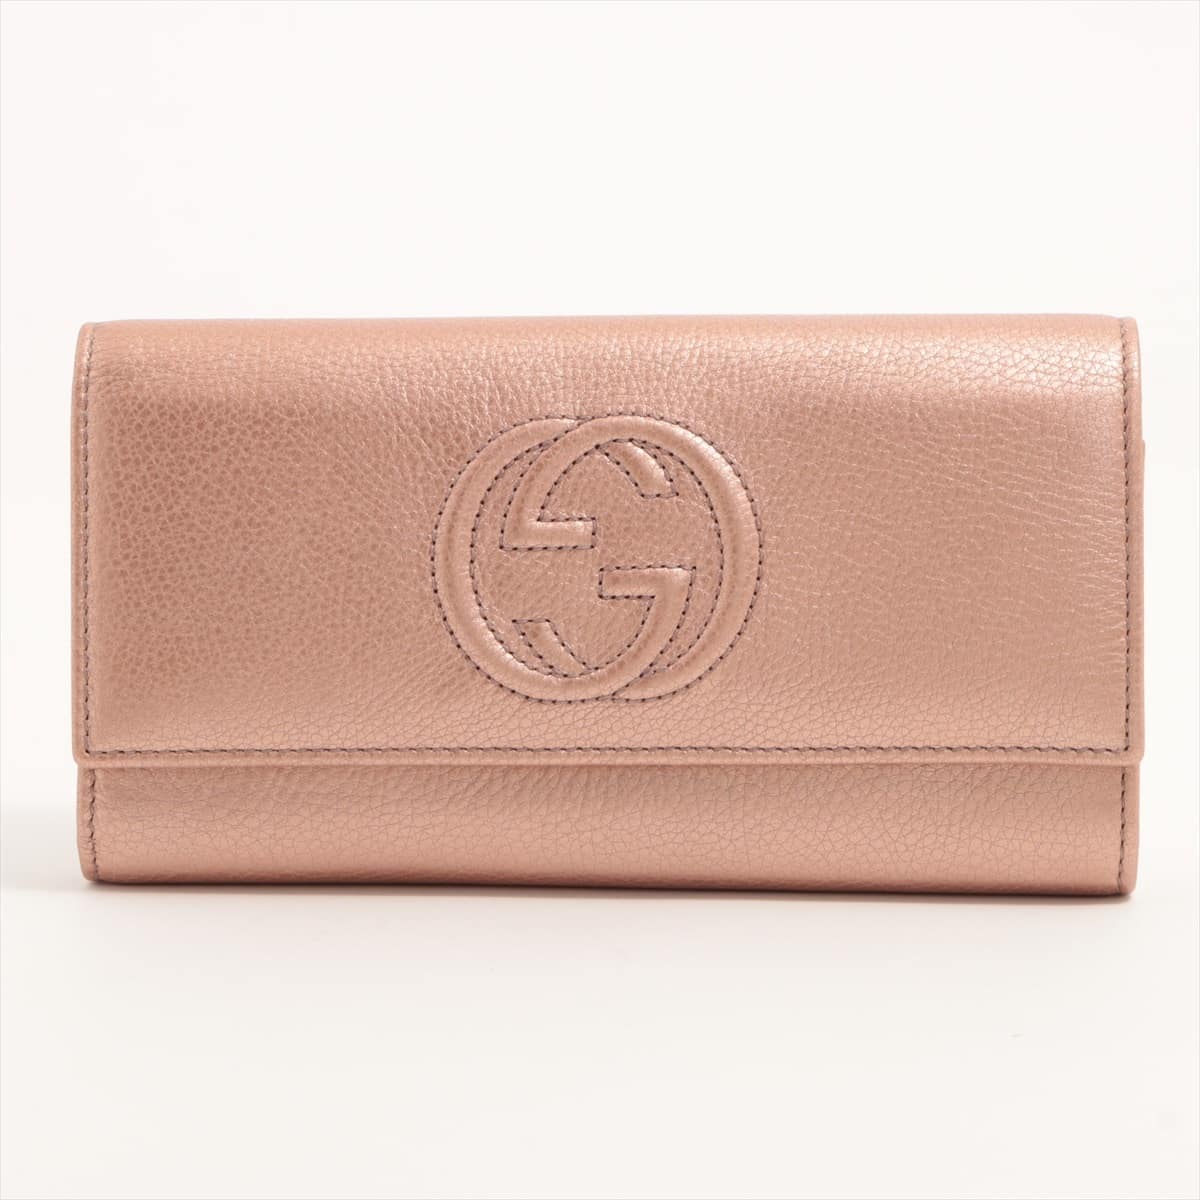 Gucci Soho Interlocking G 282414 Leather Wallet Pink Gold